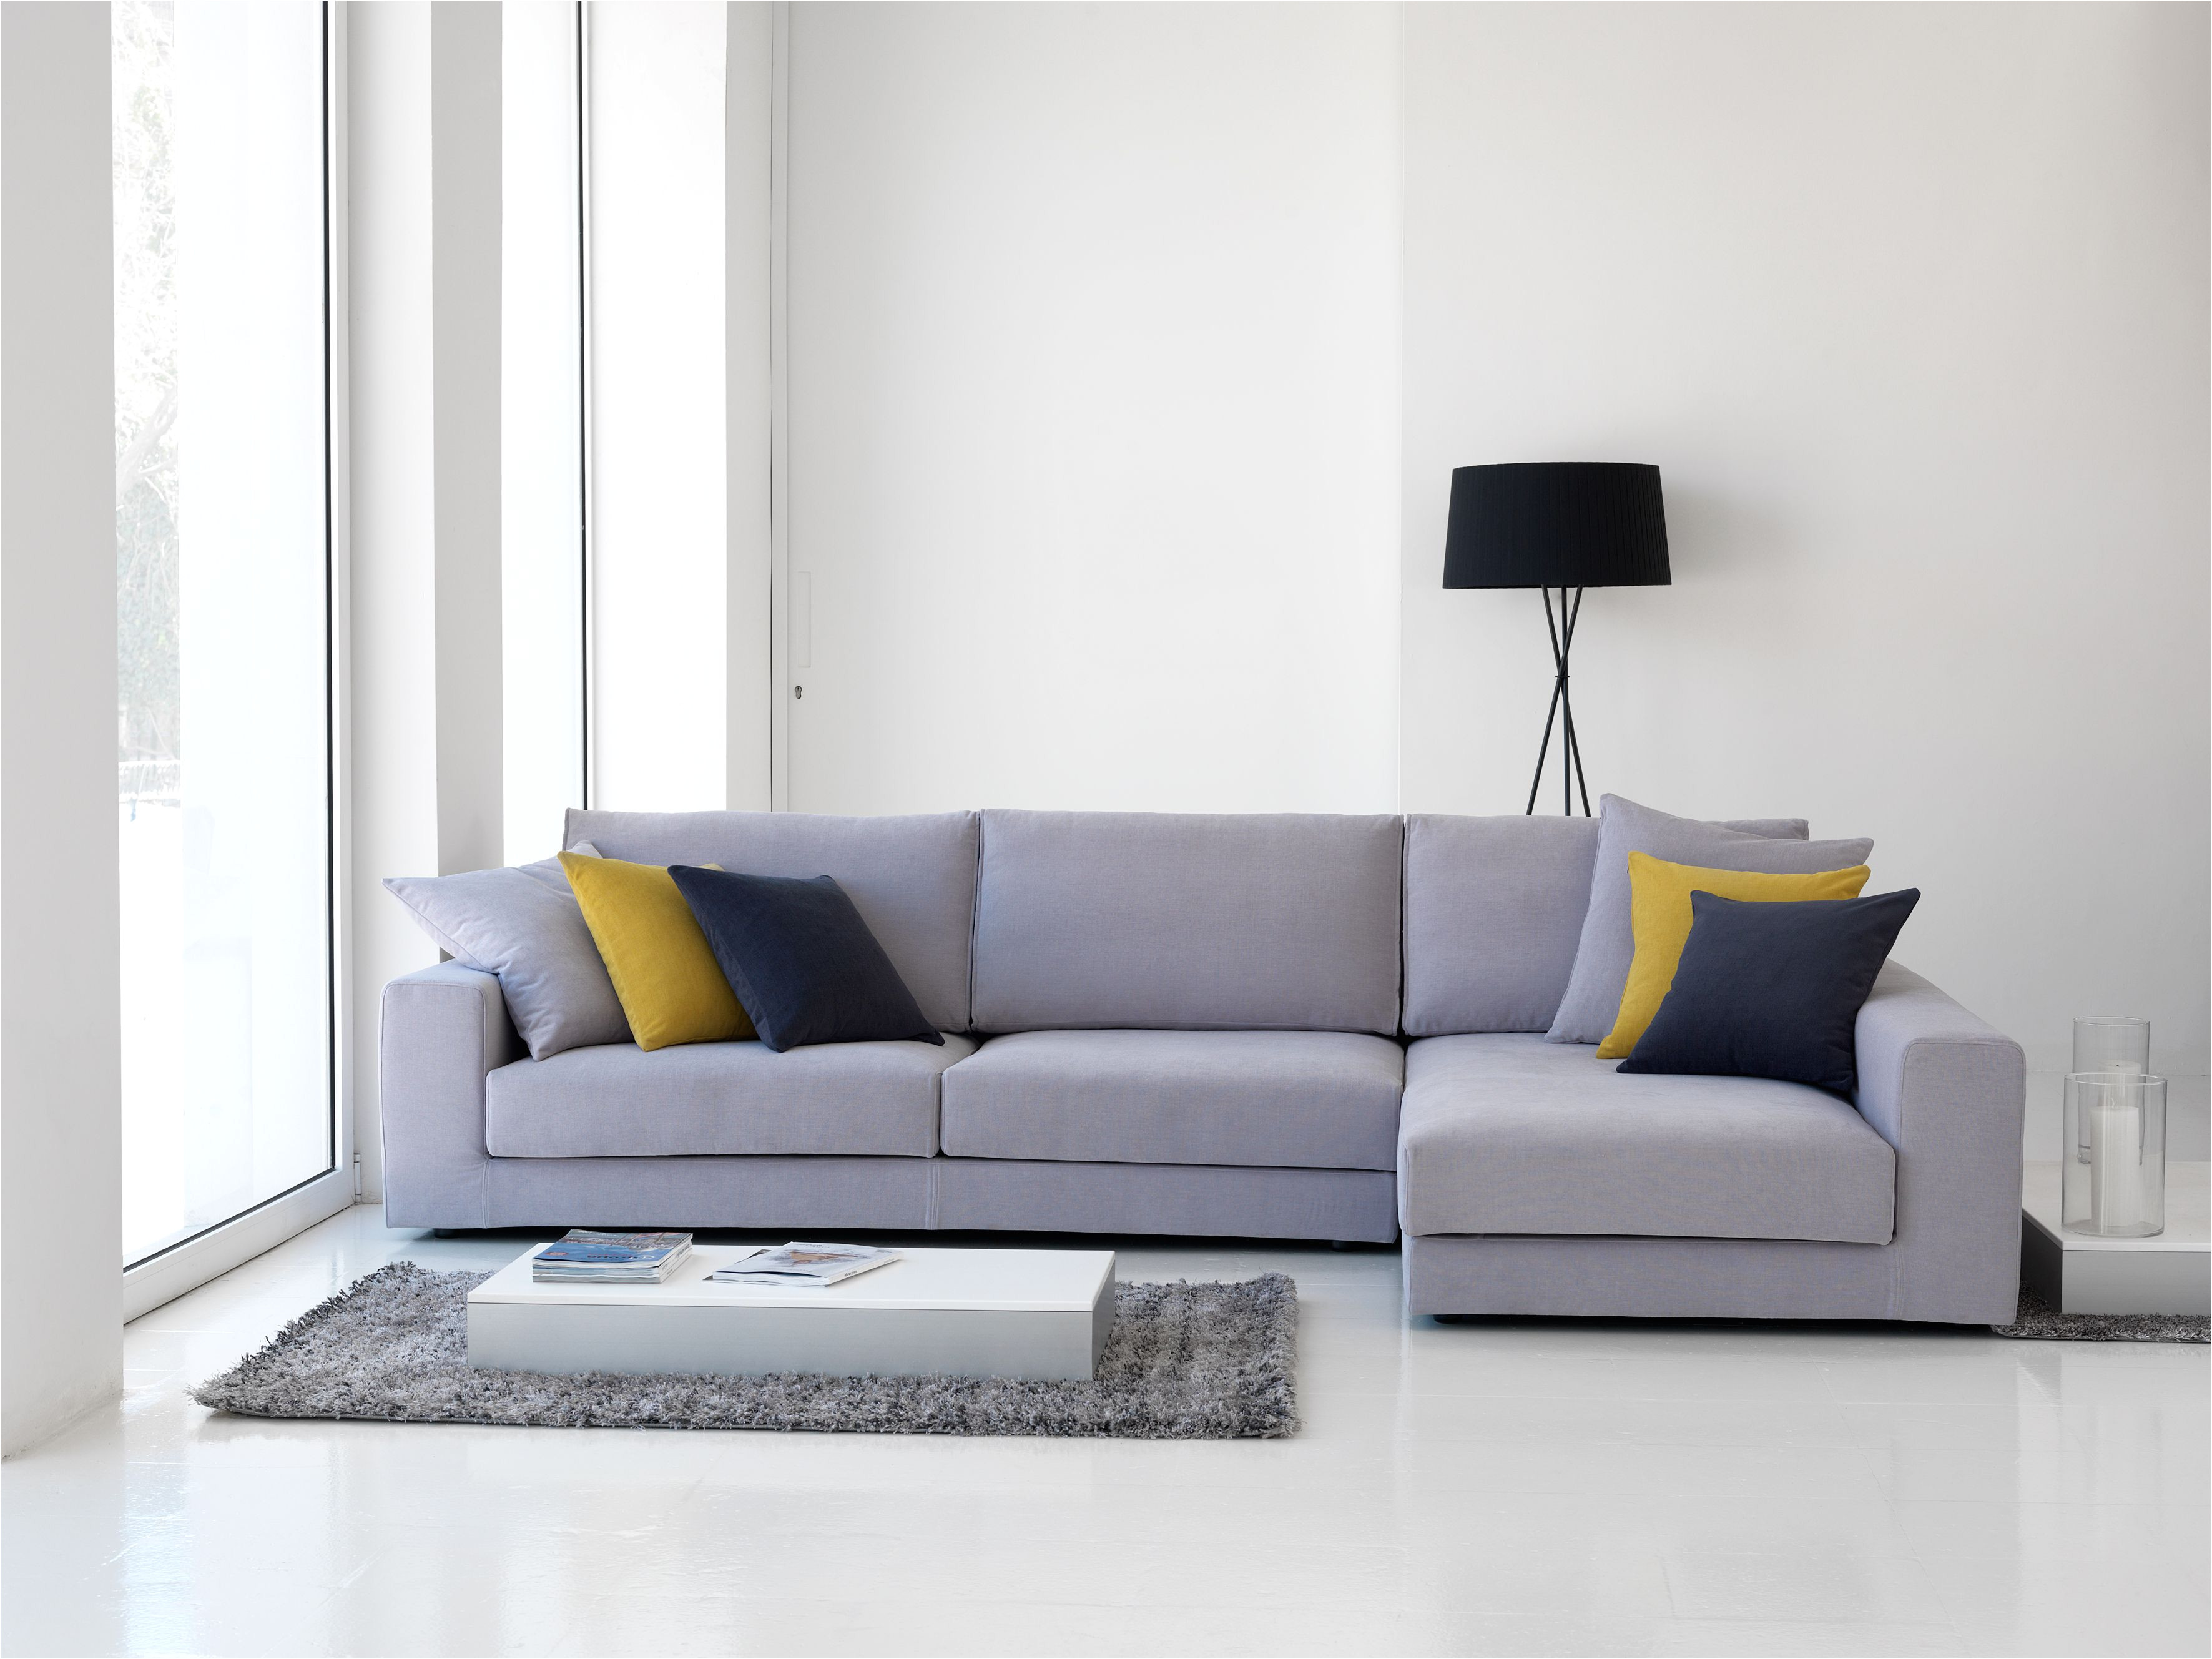 gray sofa spin create yourself mystic texture interior design home